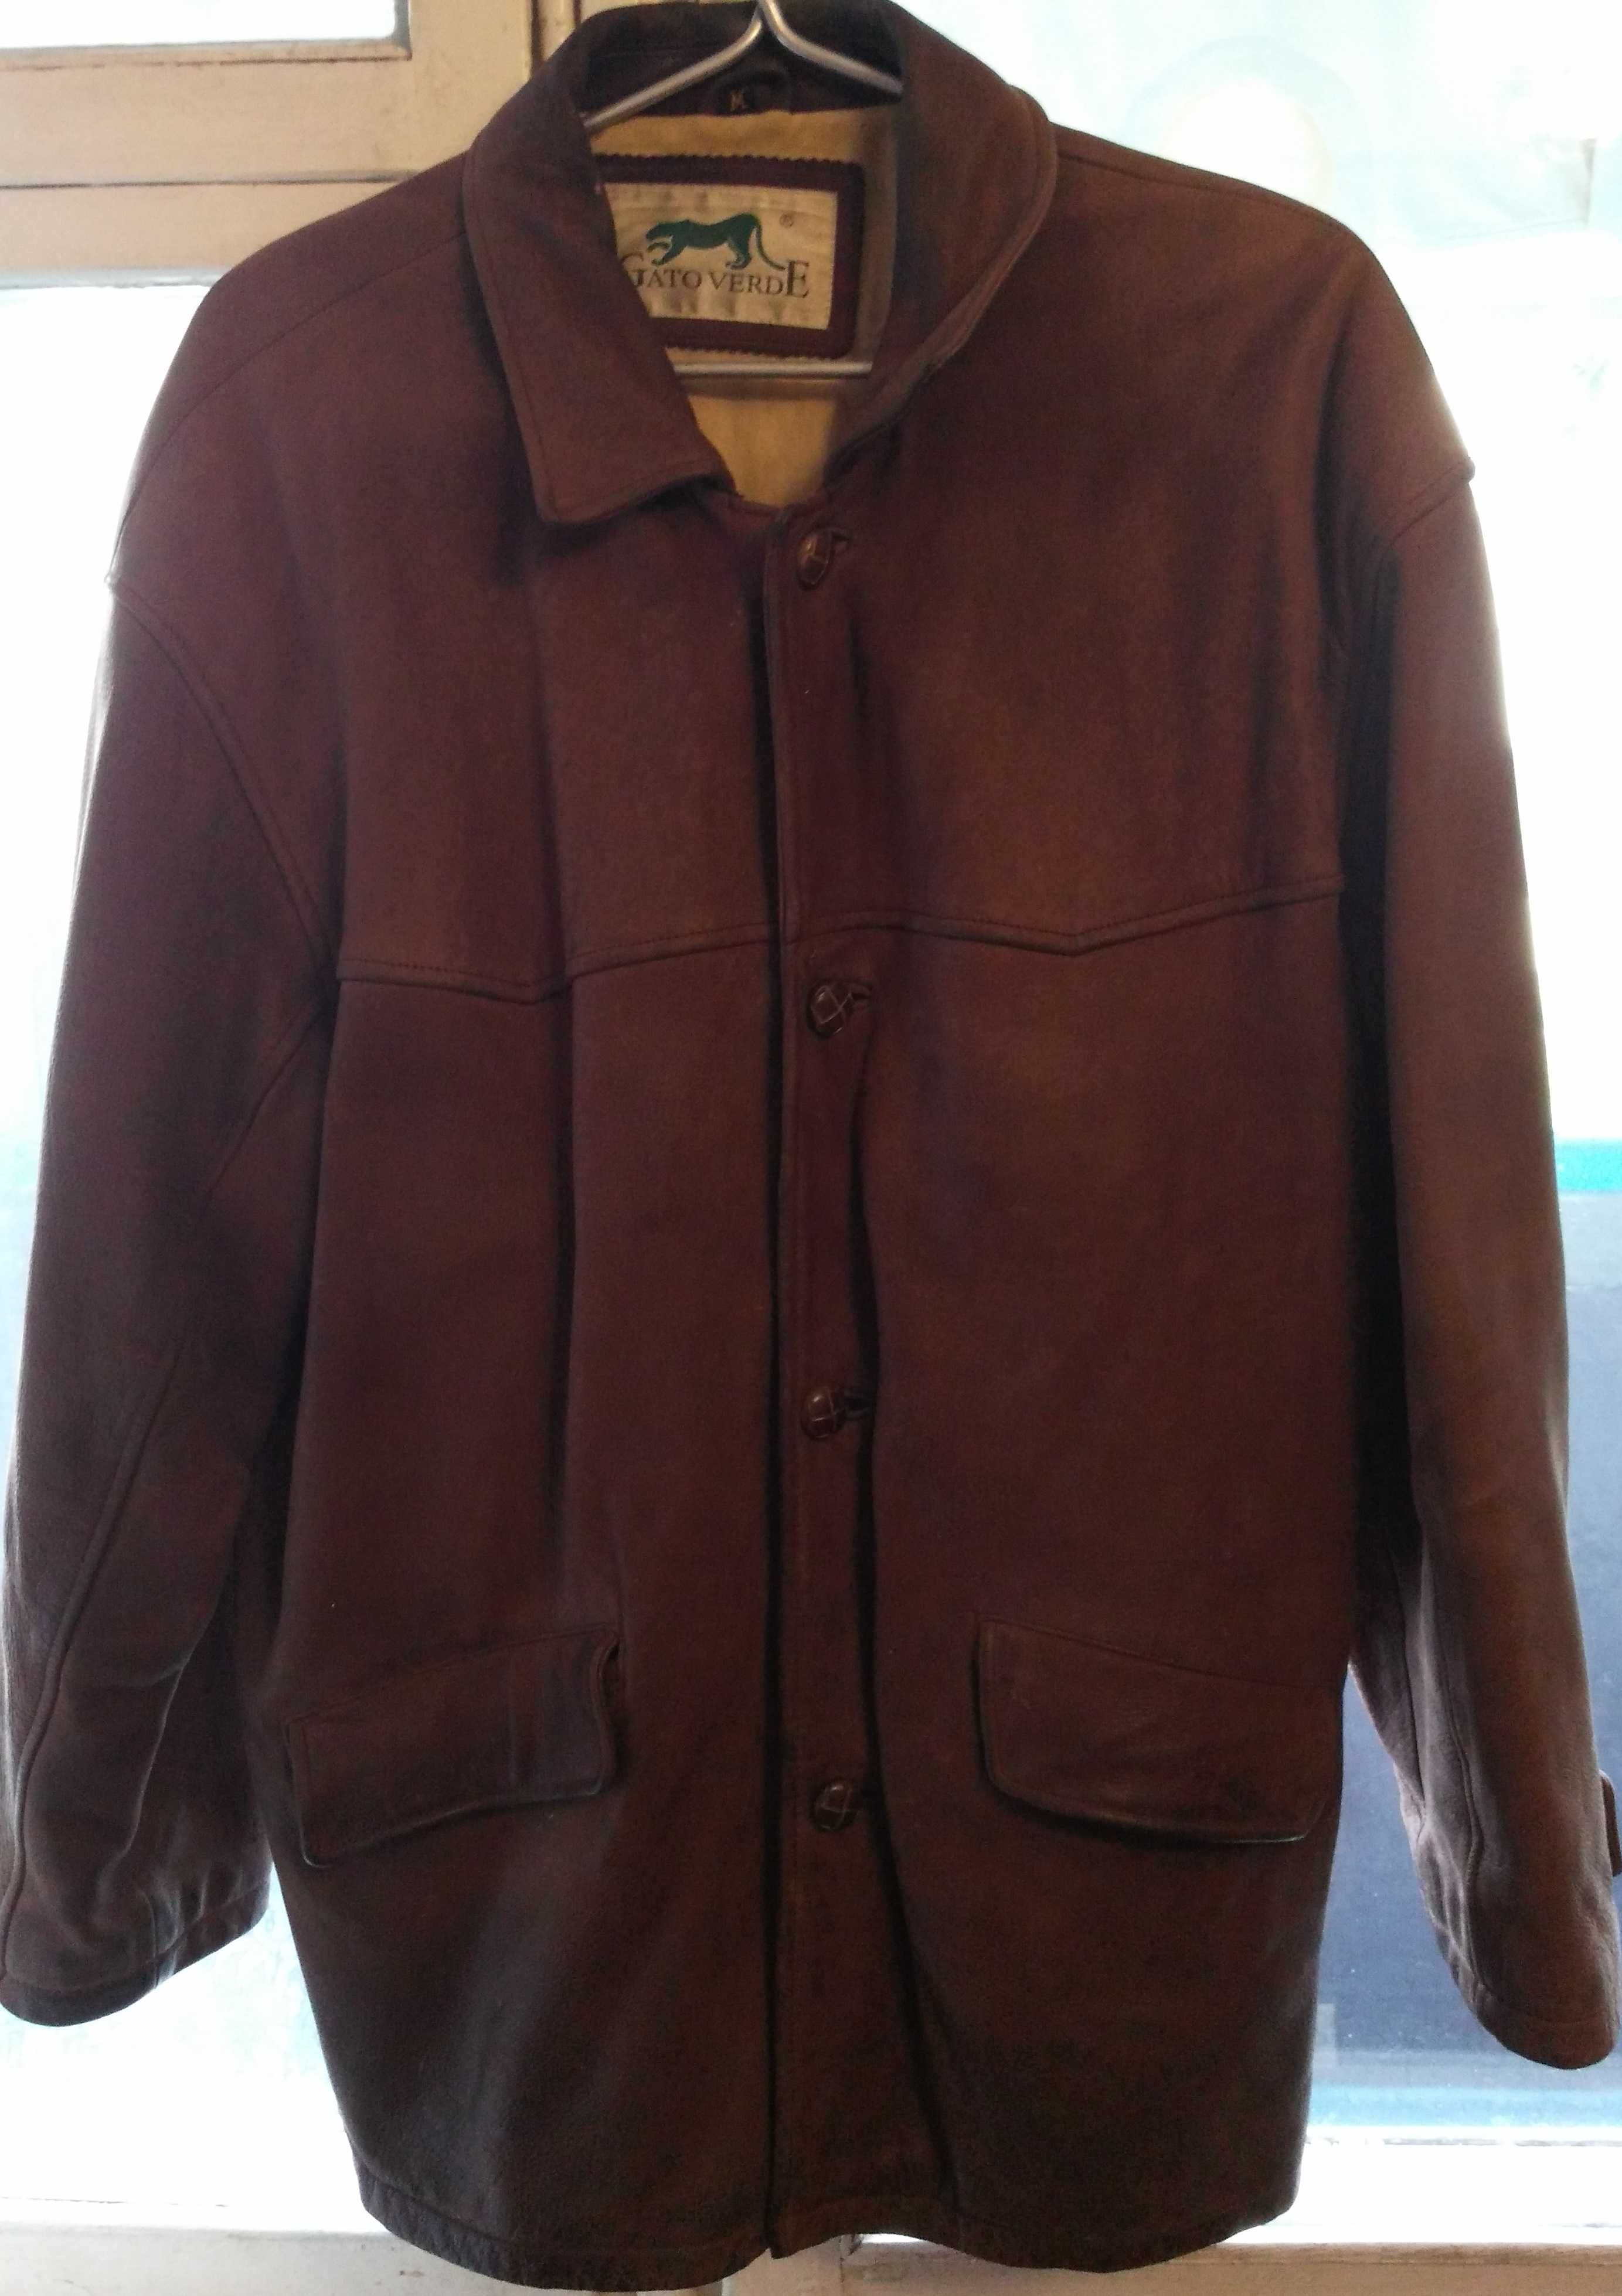 Куртка муж. Gato Verde (Italy) р. 48-50 натур. кожа защ. дождь и ветер